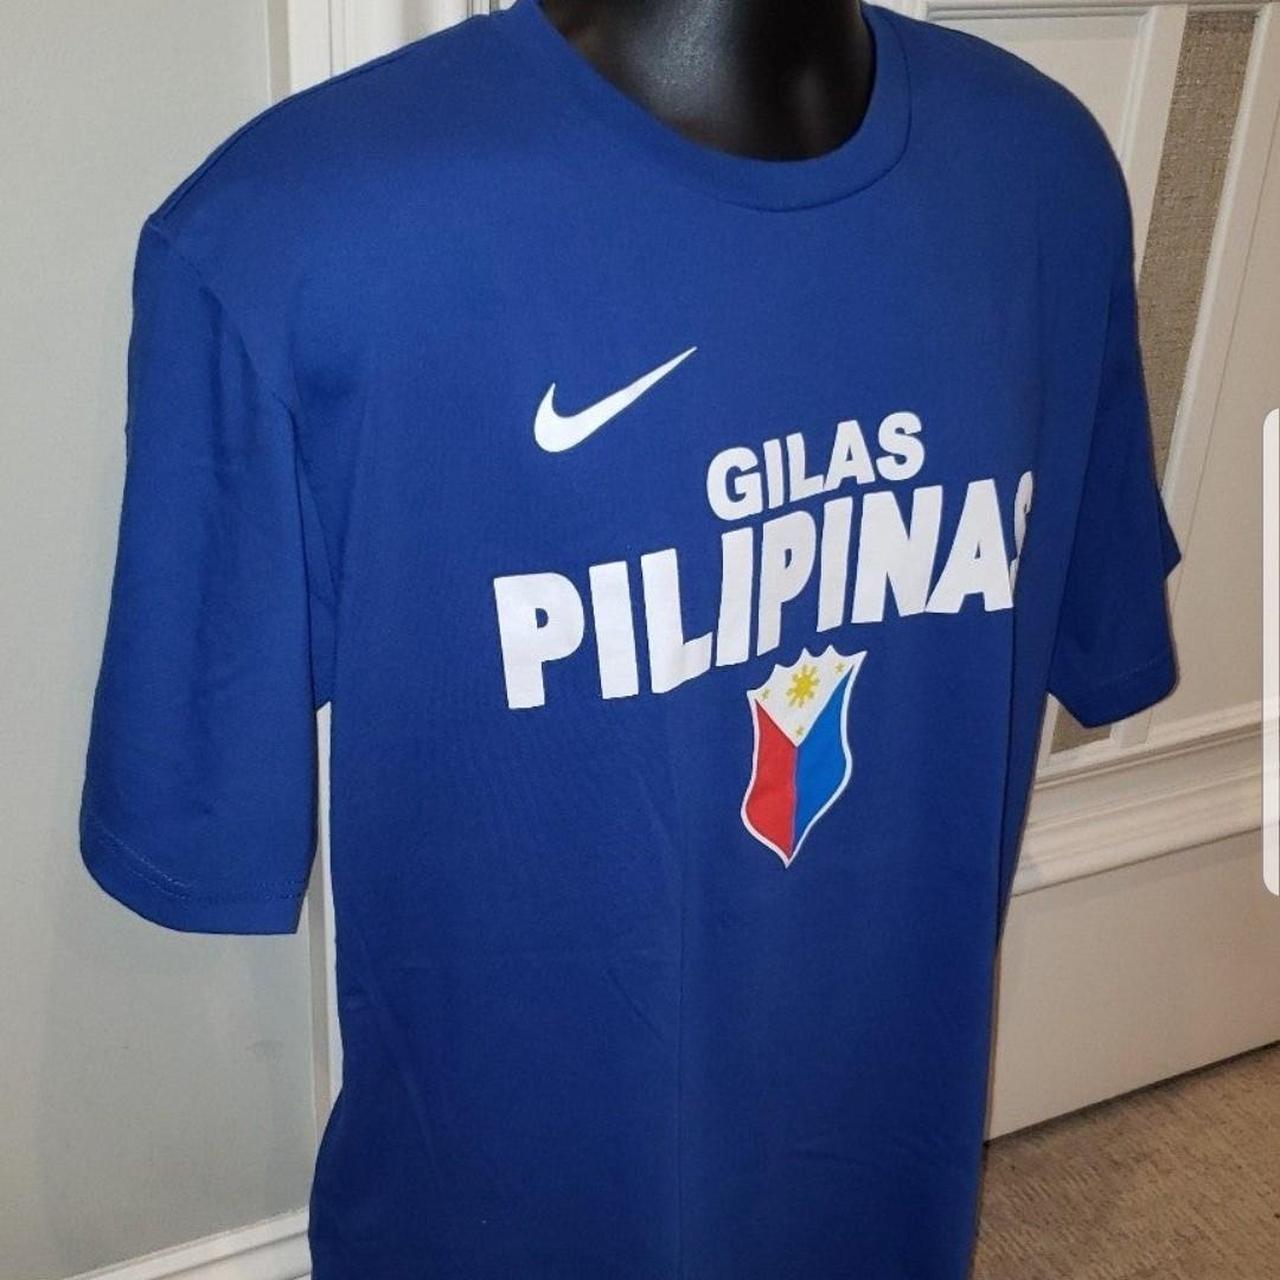  Pilipinas Basketball Wear, Gilas Pilipinas Casual Tee Tank Top  : Clothing, Shoes & Jewelry